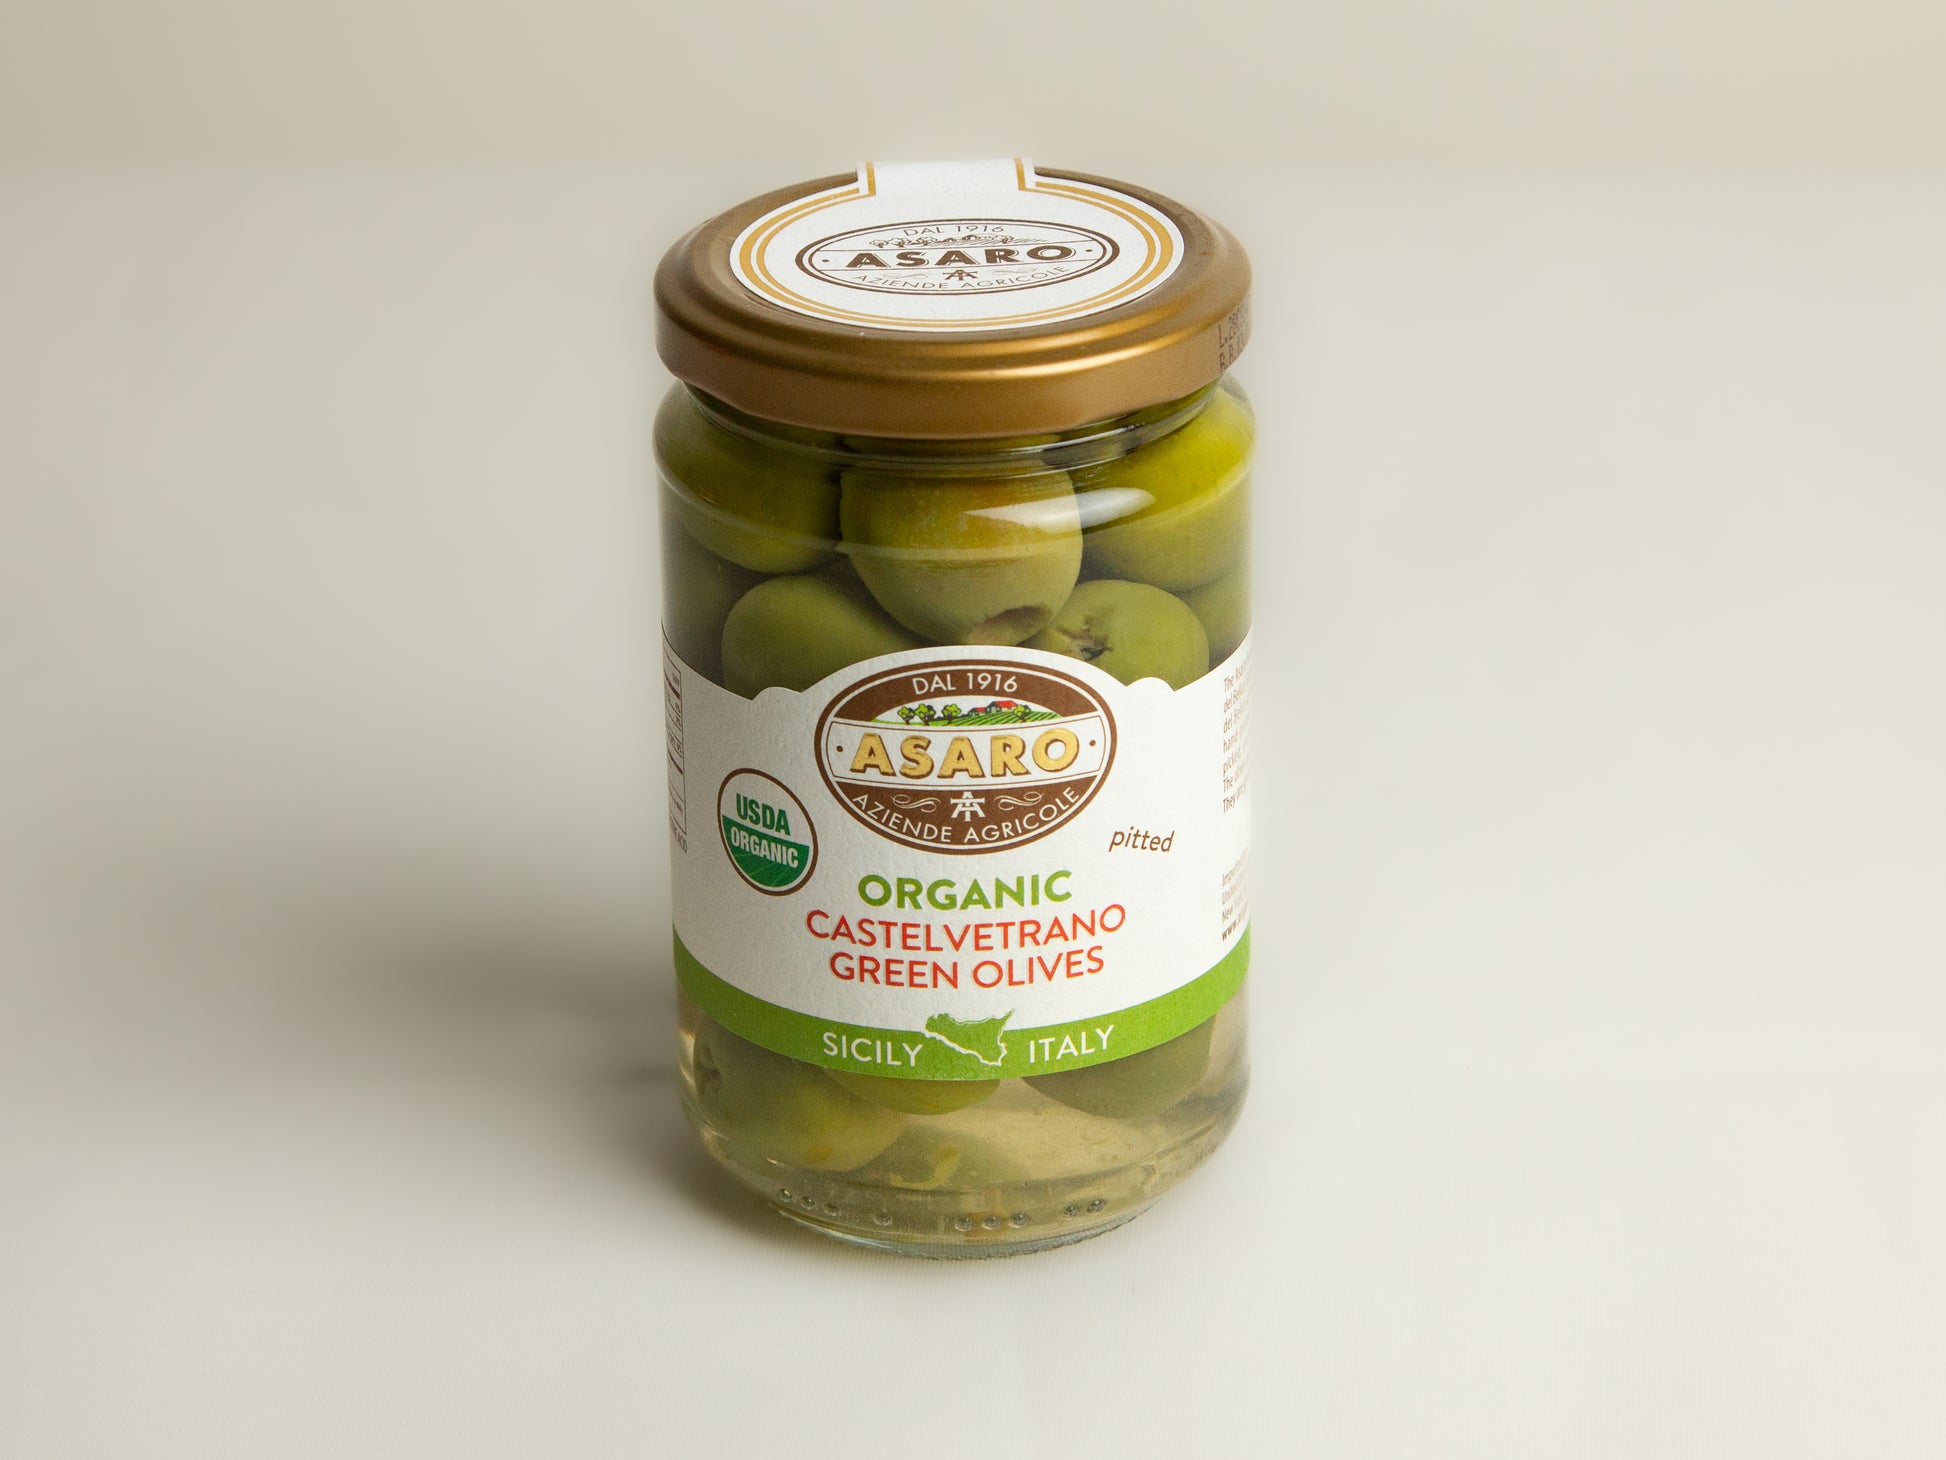 Asaro Organic Castelvetrano Green Olives in glass jar